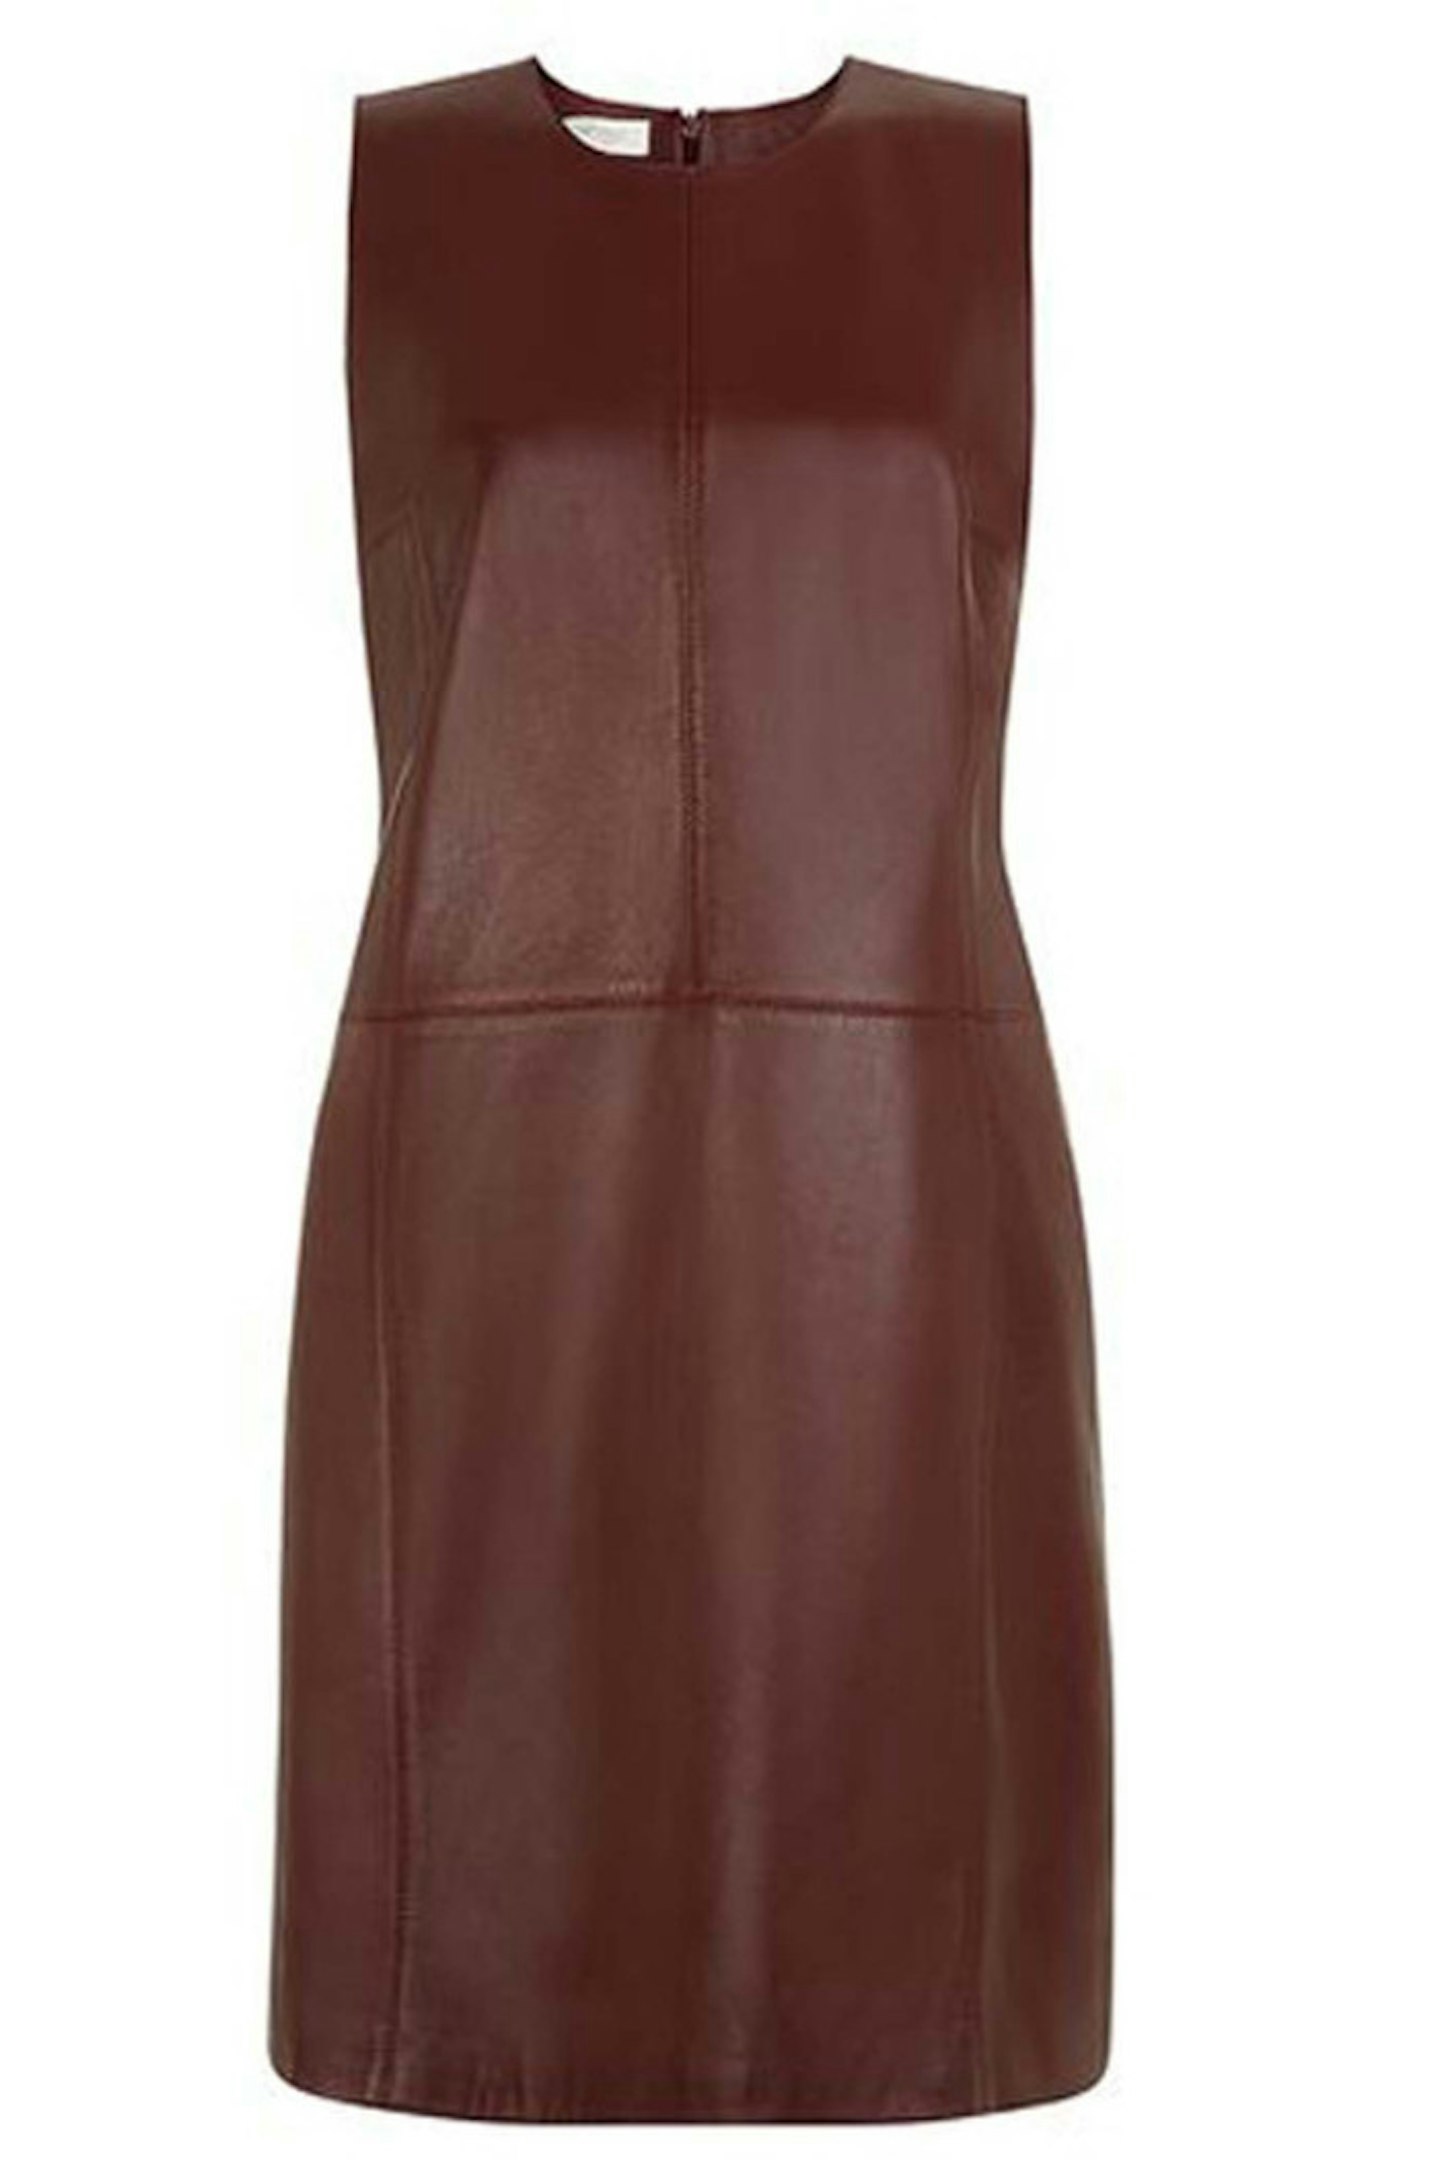 49. Sleeveless Leather Shift Dress, £206.10, HOBBS